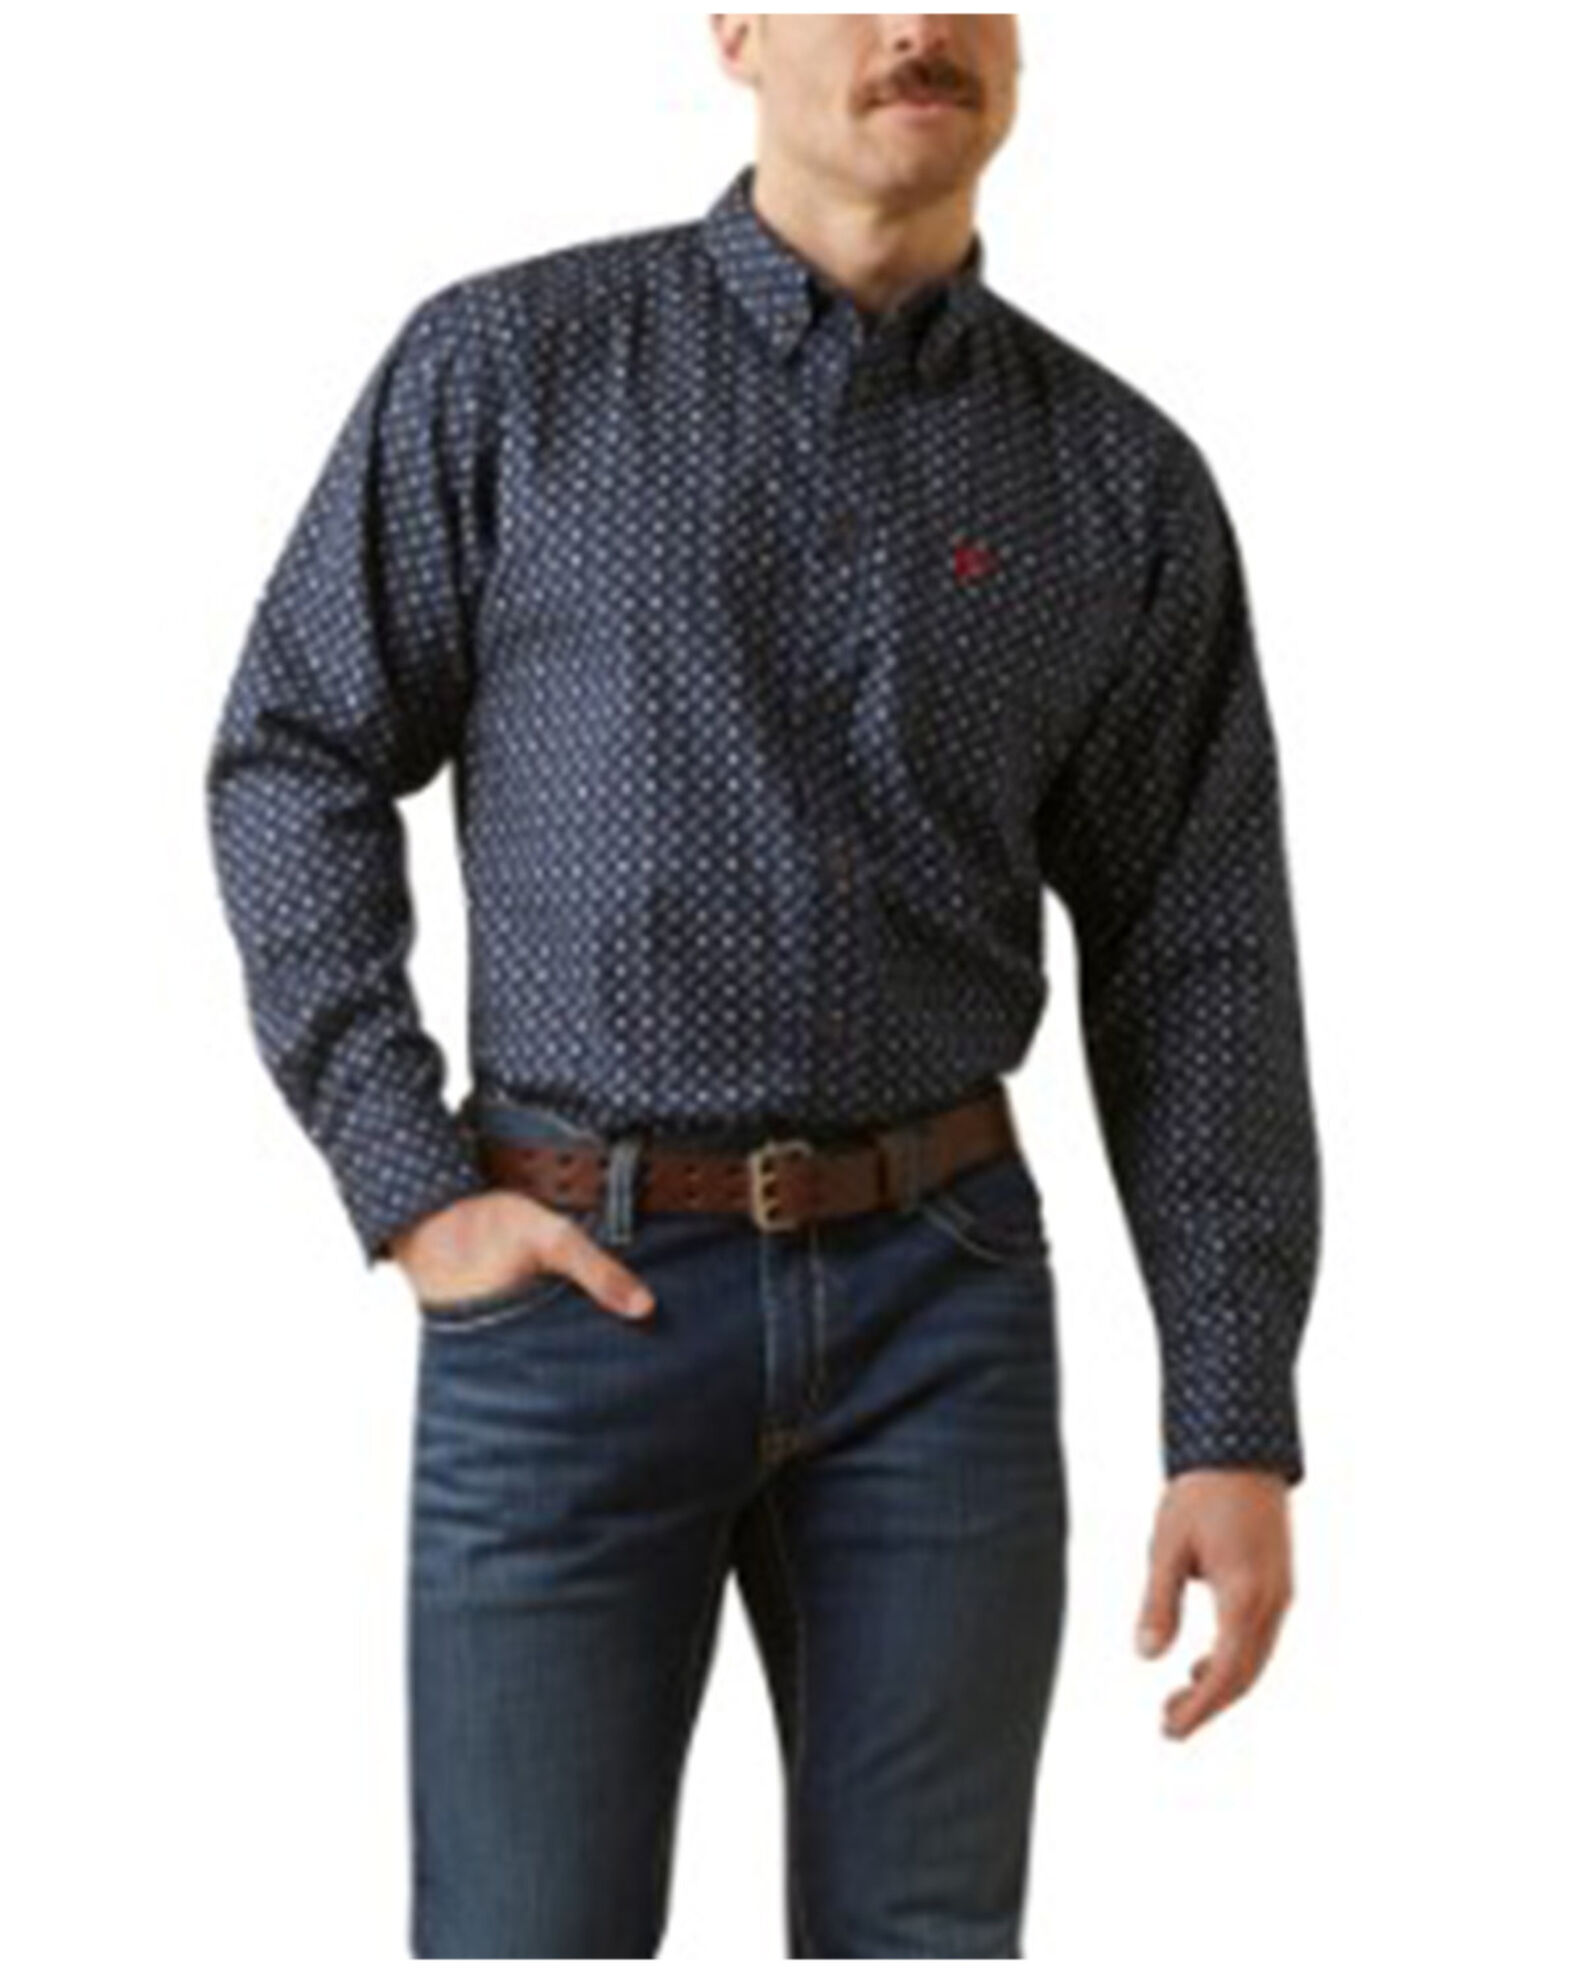 Men's FR Work Sweatpants in Black Cotton, Size: XL Regular by Ariat